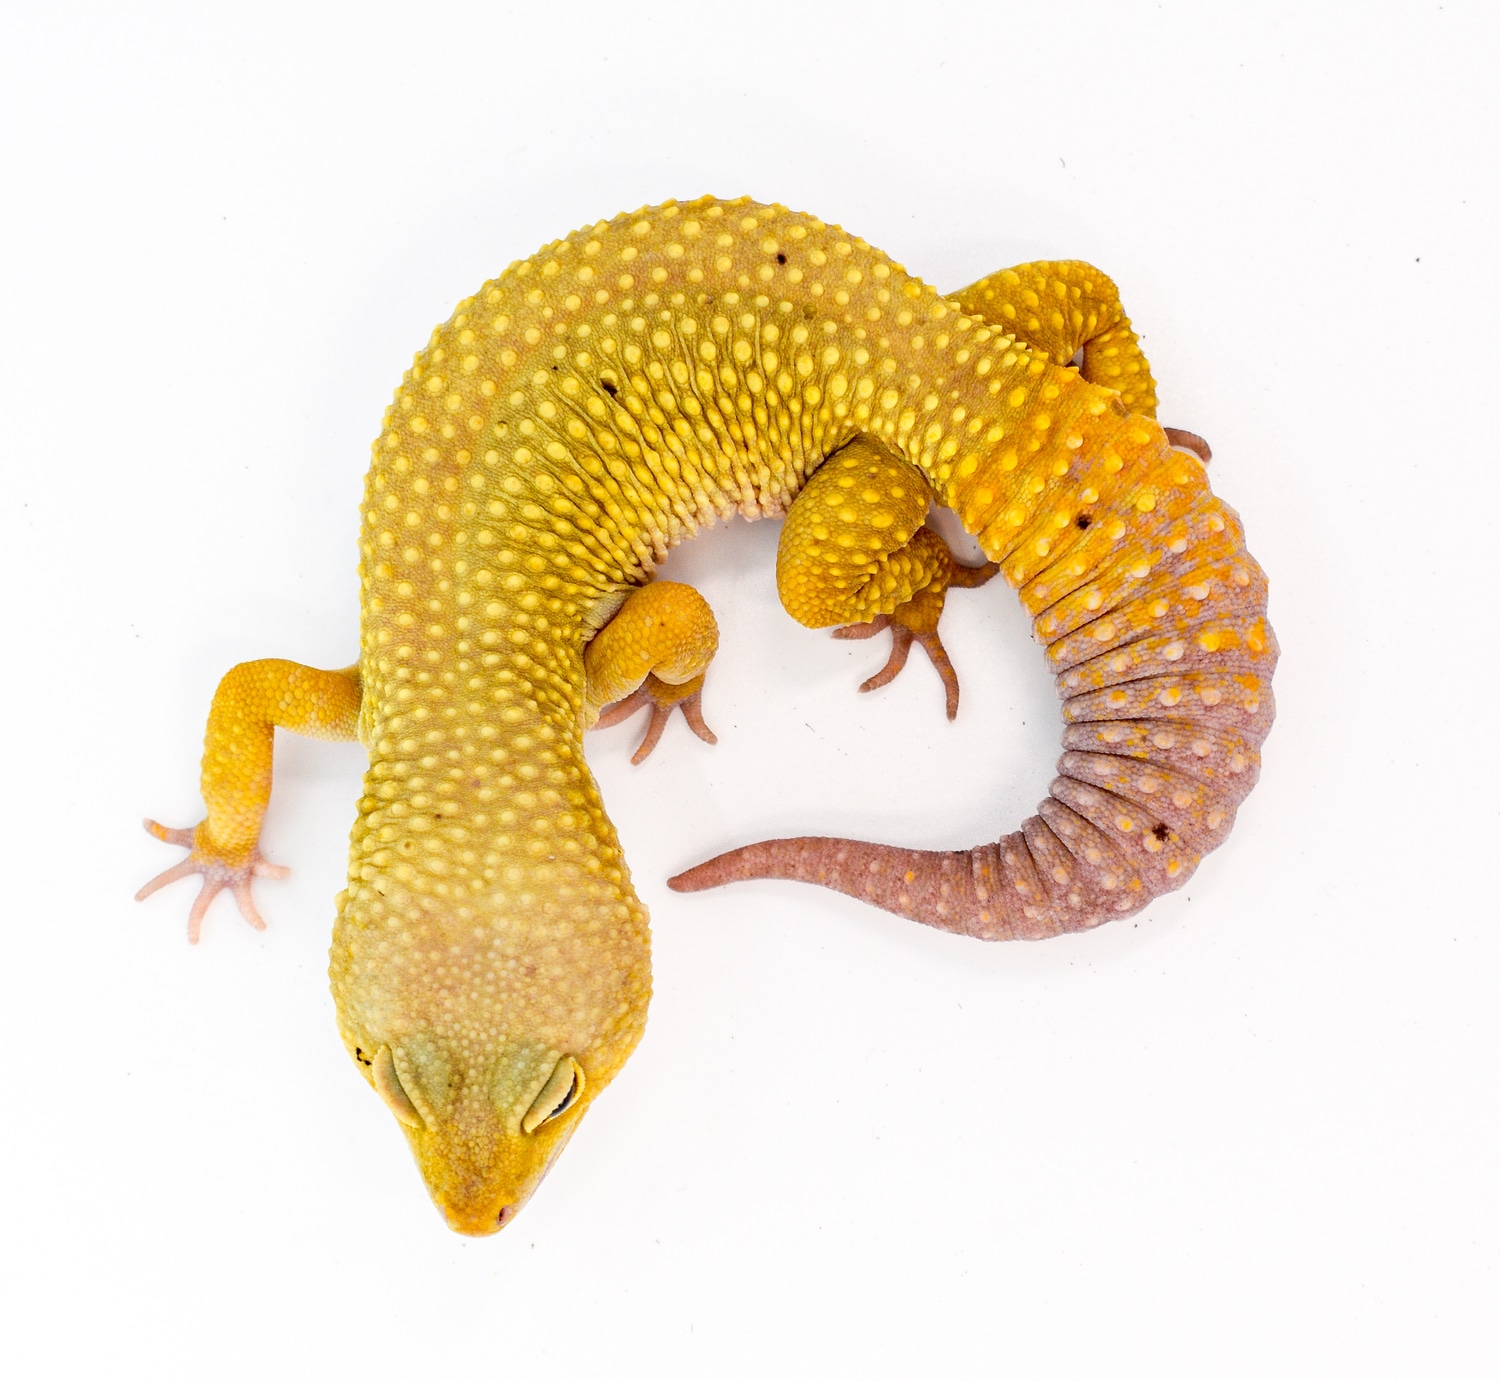 Murphy’s Patternless Carrot Tail Paradox Leopard Gecko by Rhac N Roll